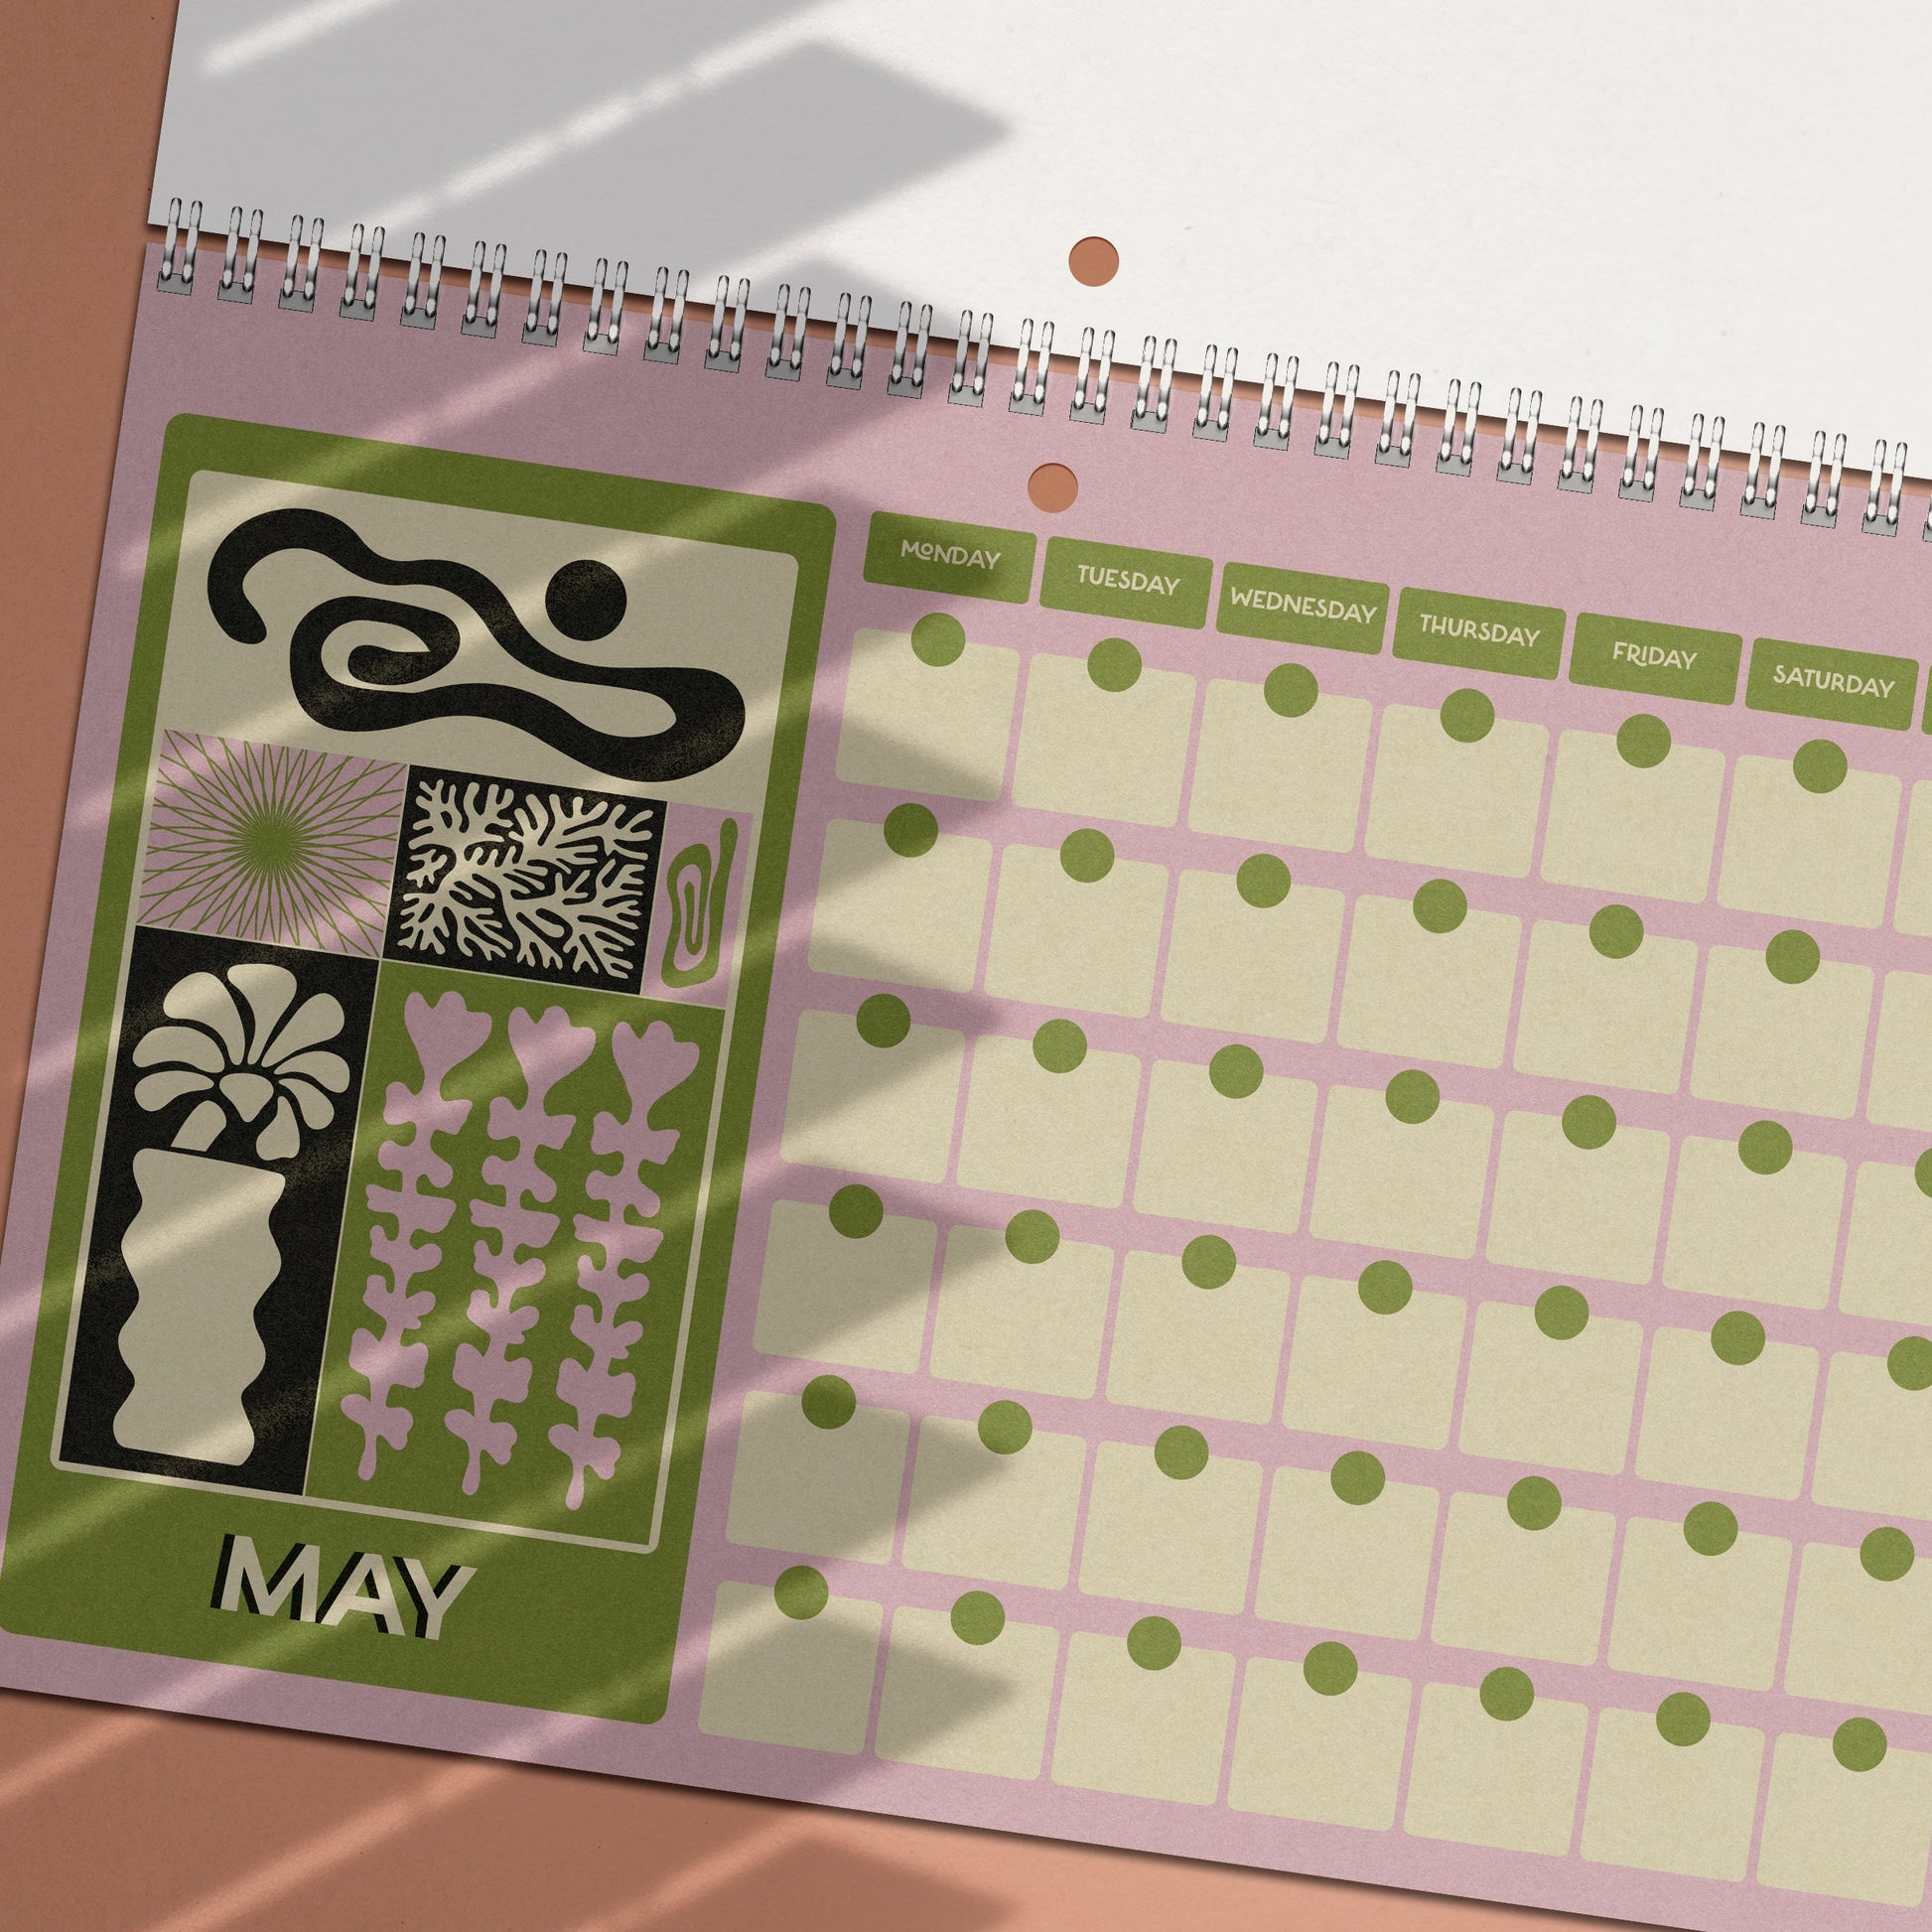 Undated Monthly Calendar | Wall Planner | Matisse Inspired | A4 Landscape | 12 month wirebound hanging calendar-3